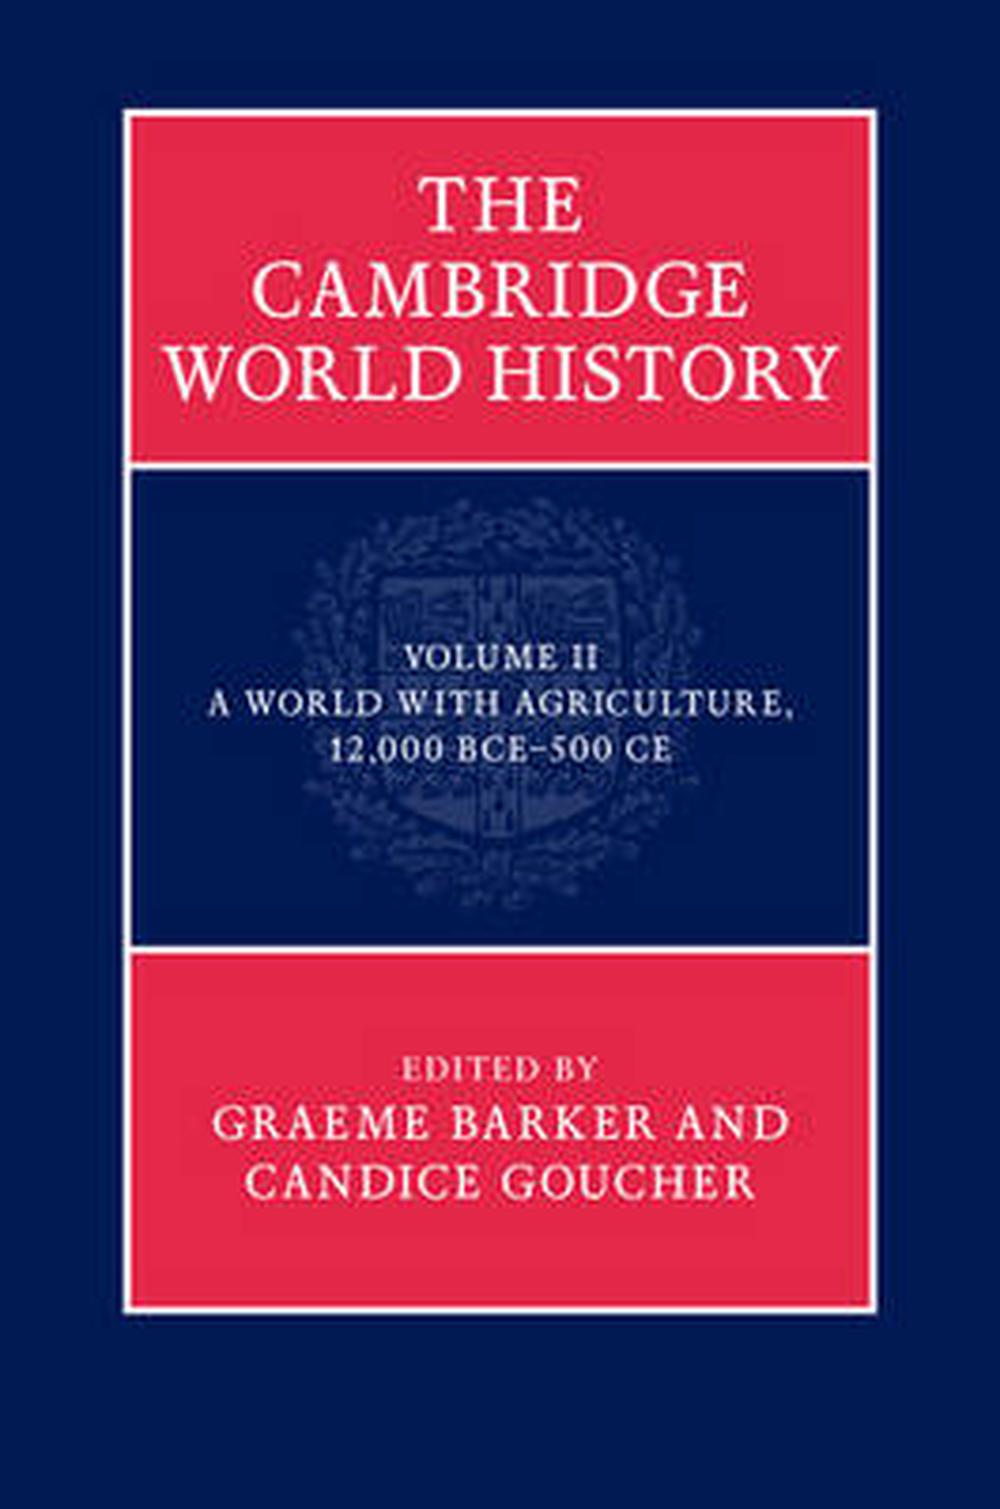 Cambridge World History by Graeme Barker (English) Hardcover Book Free